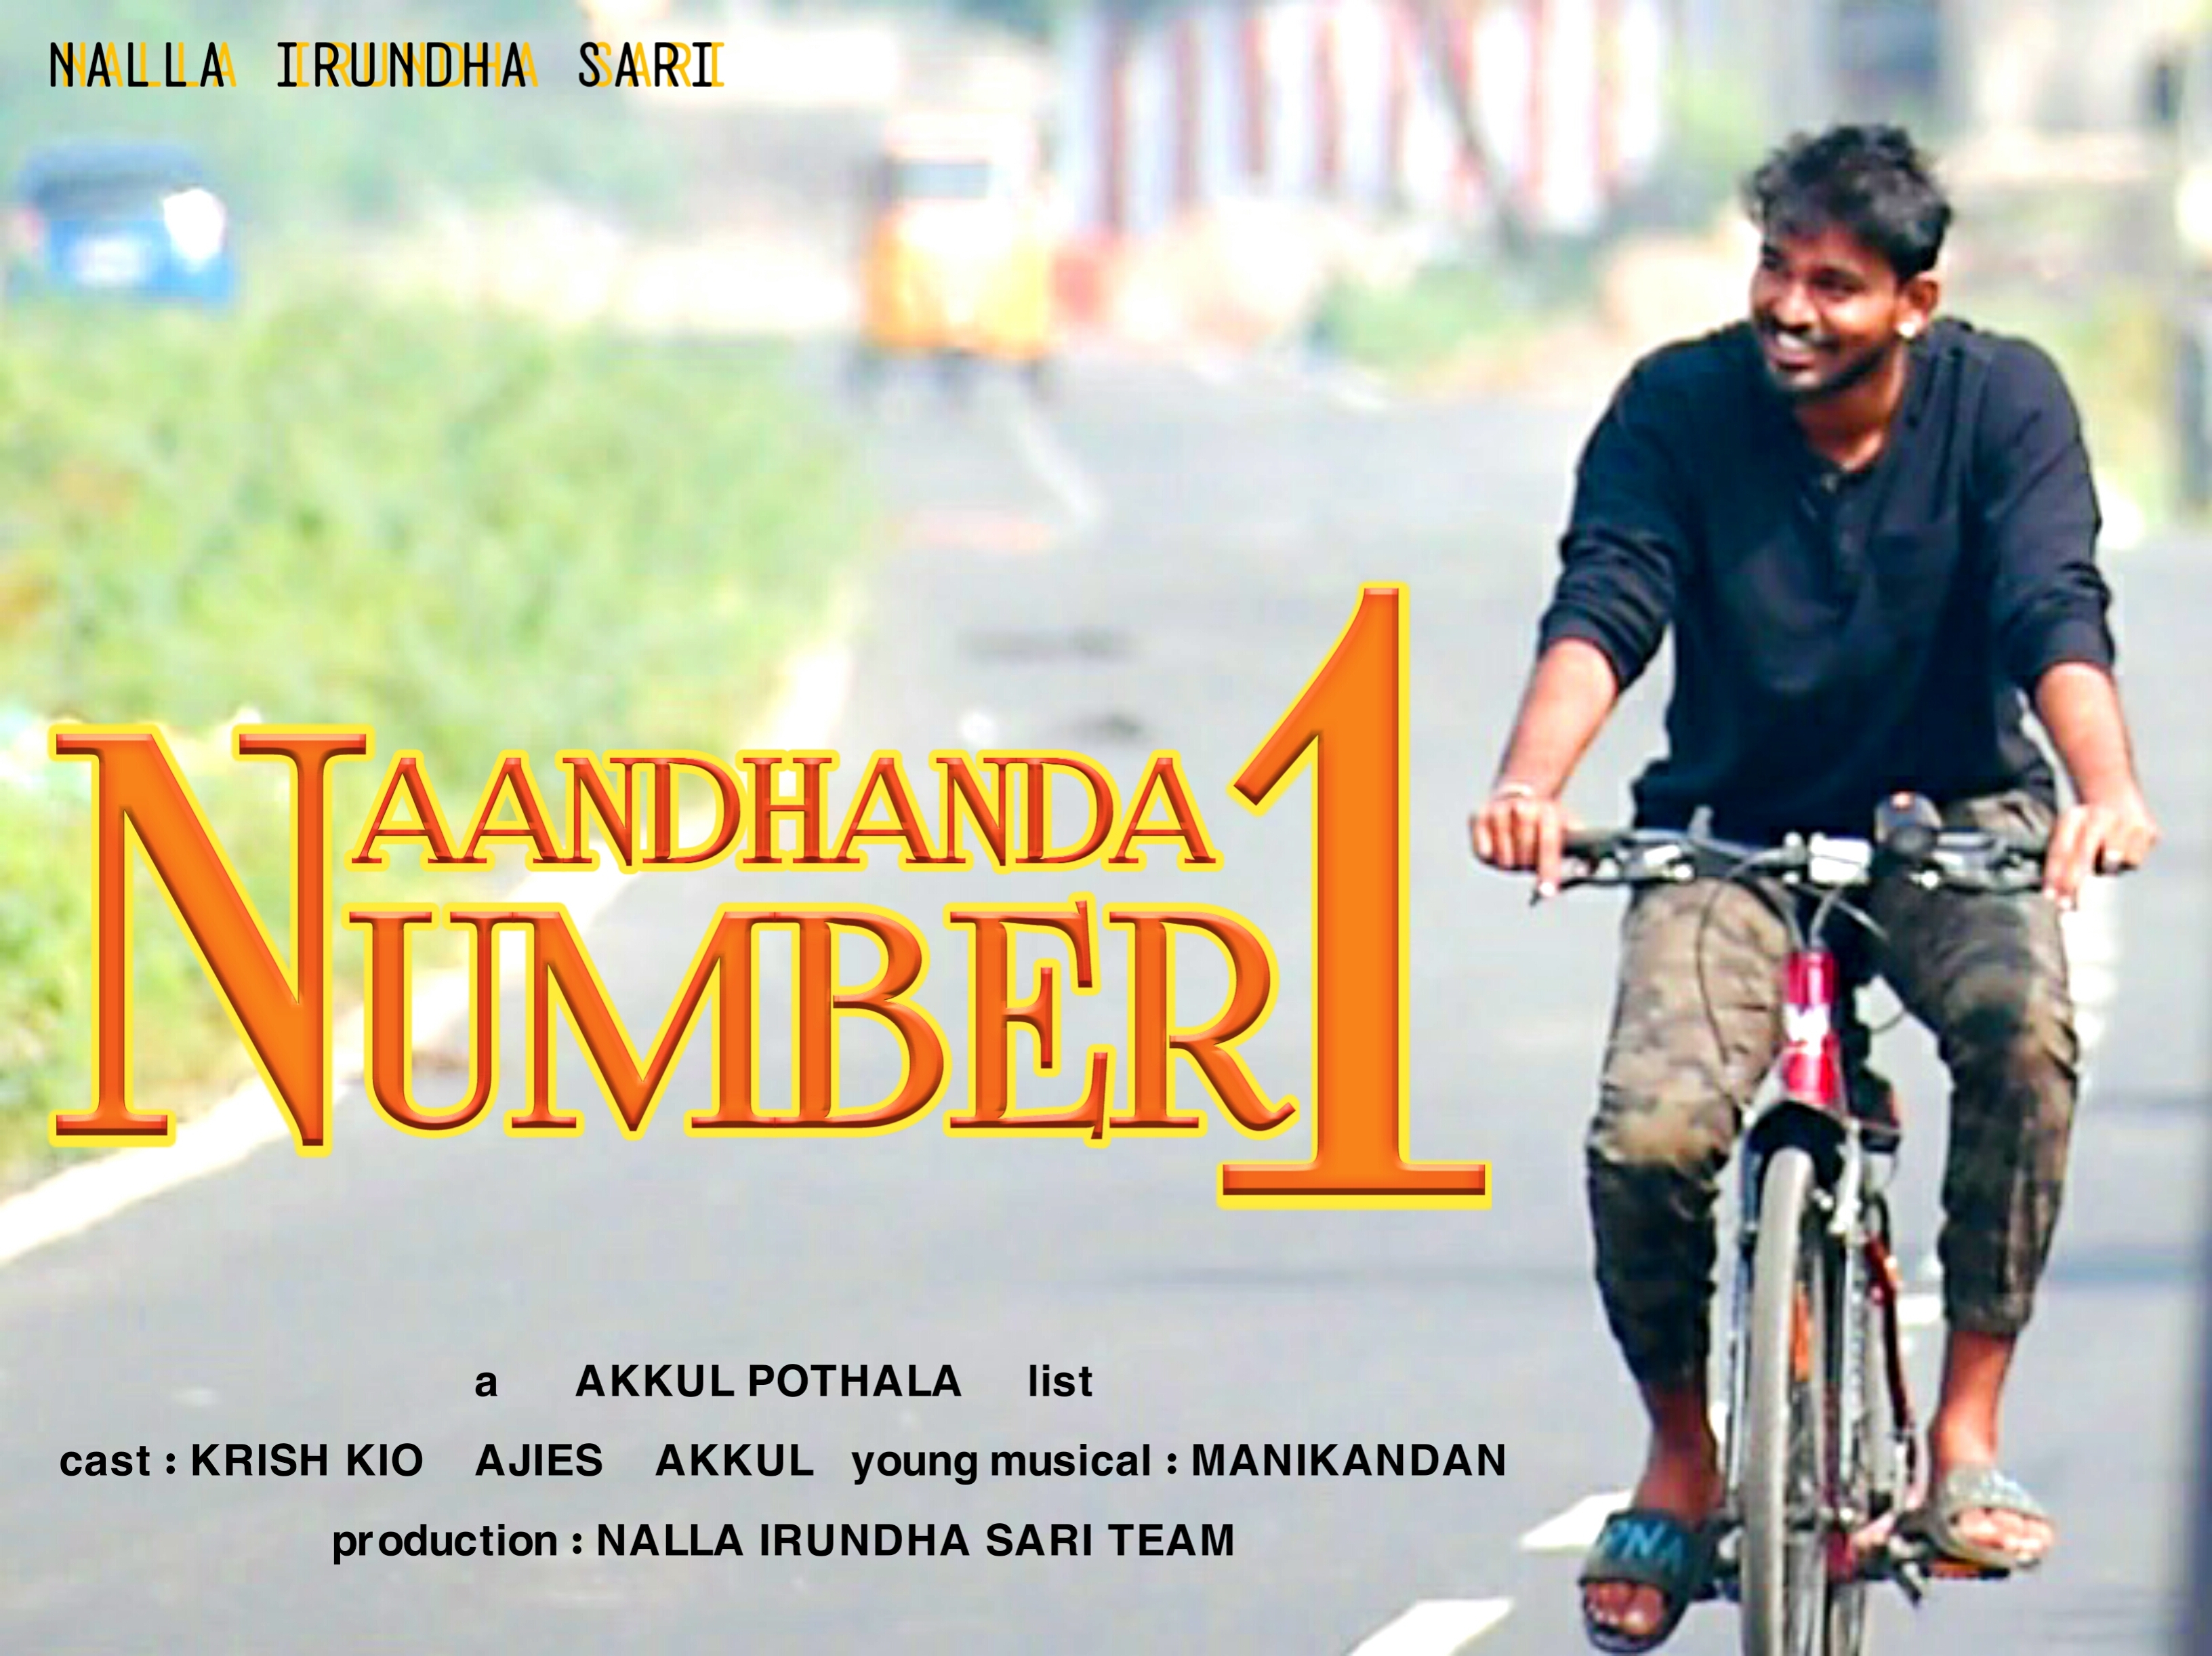 Naandhanda number one